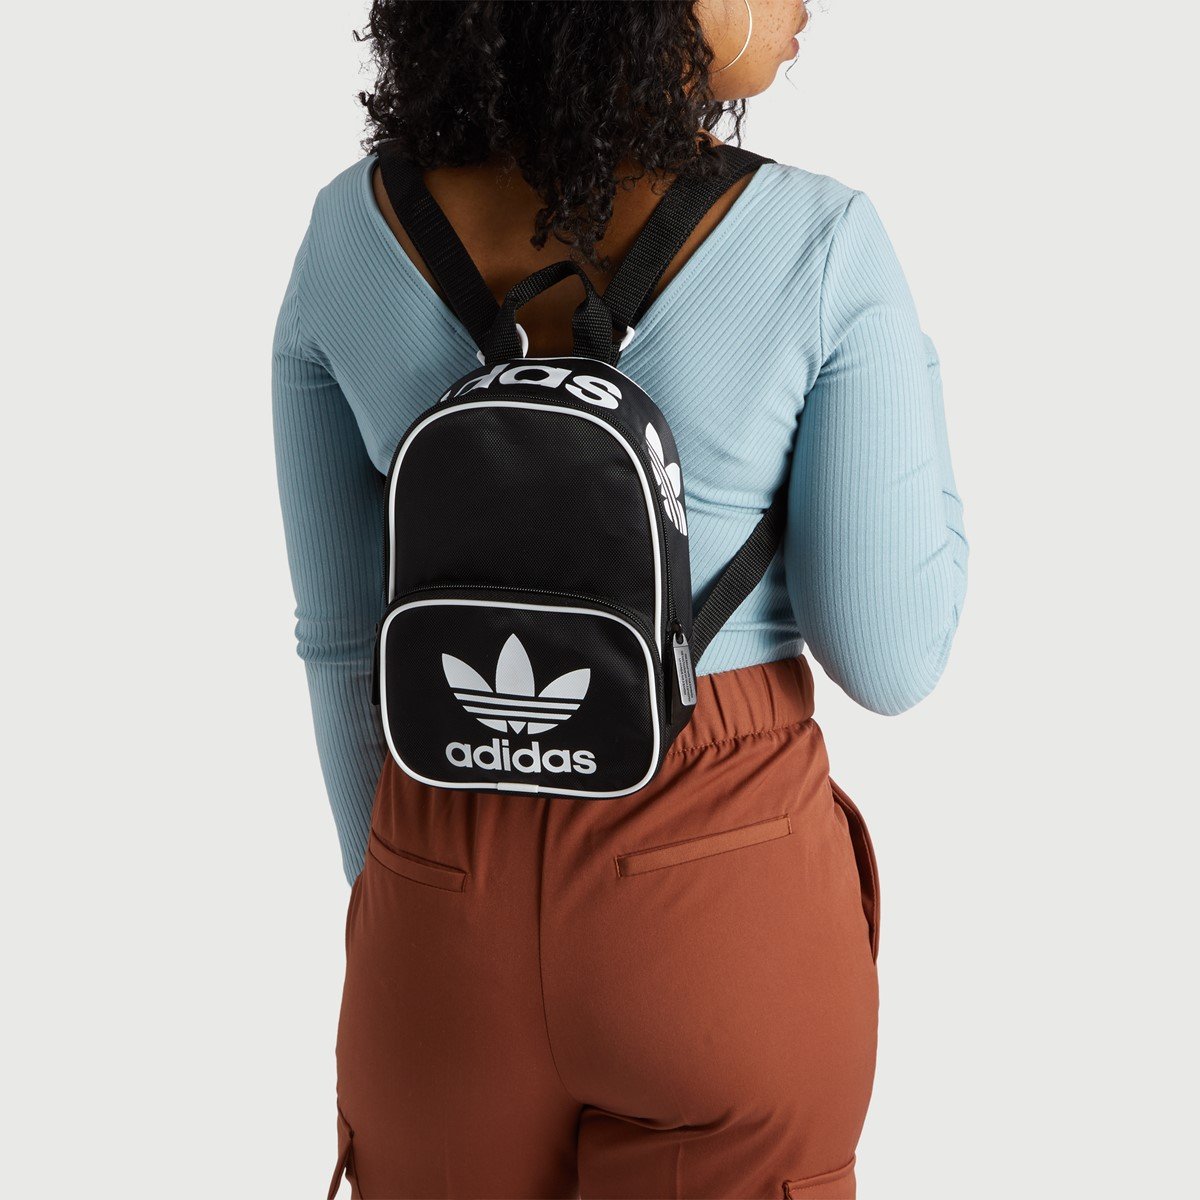 adidas women's mini backpack